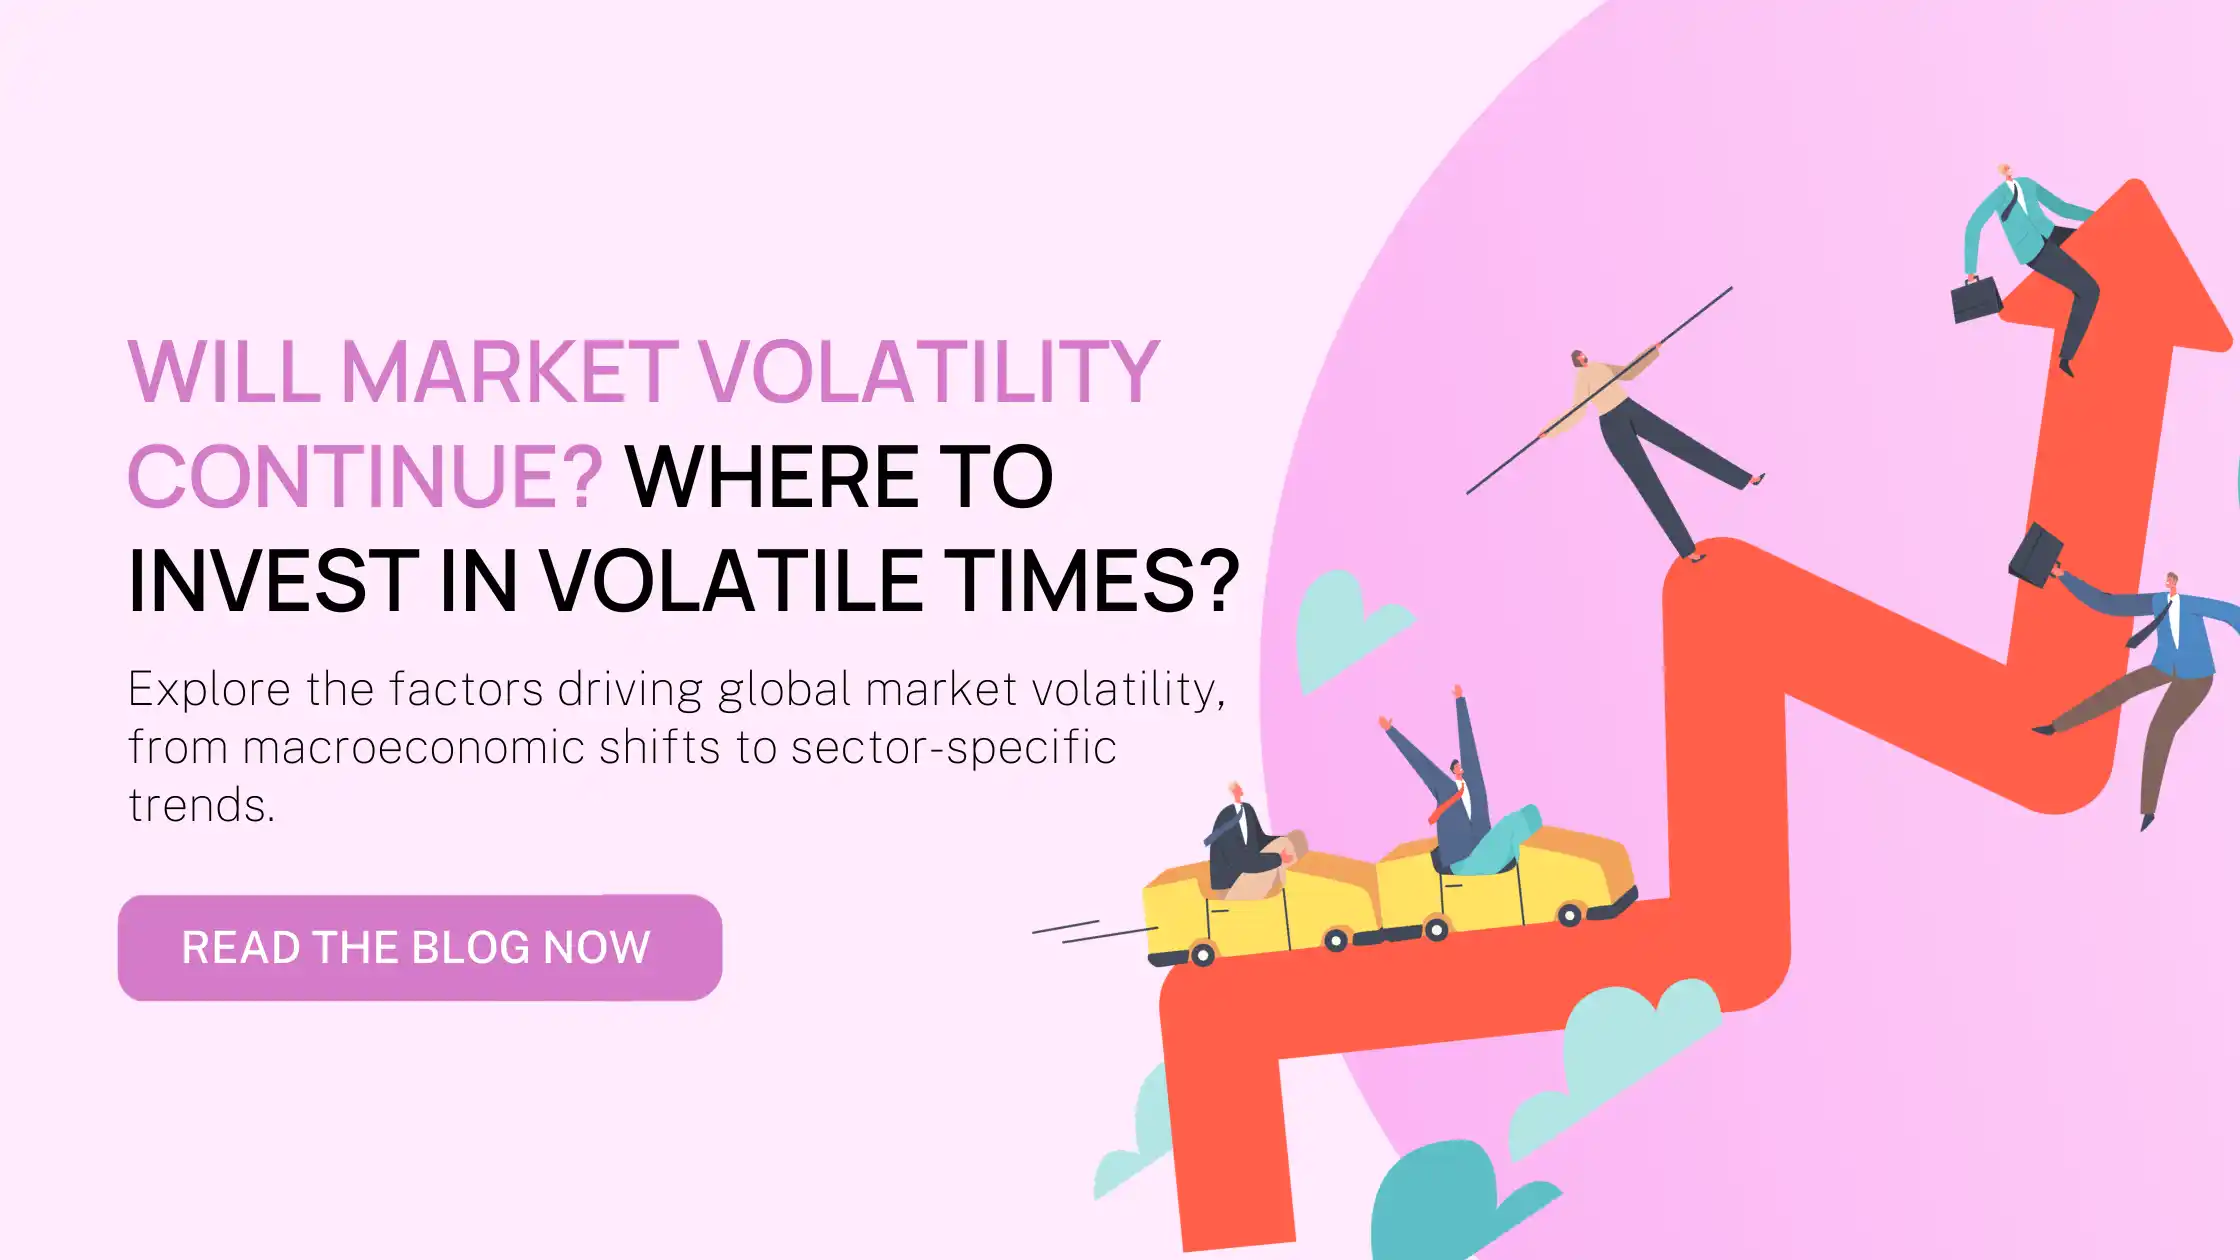 Will market volatility continue? Where to invest in volatile times?